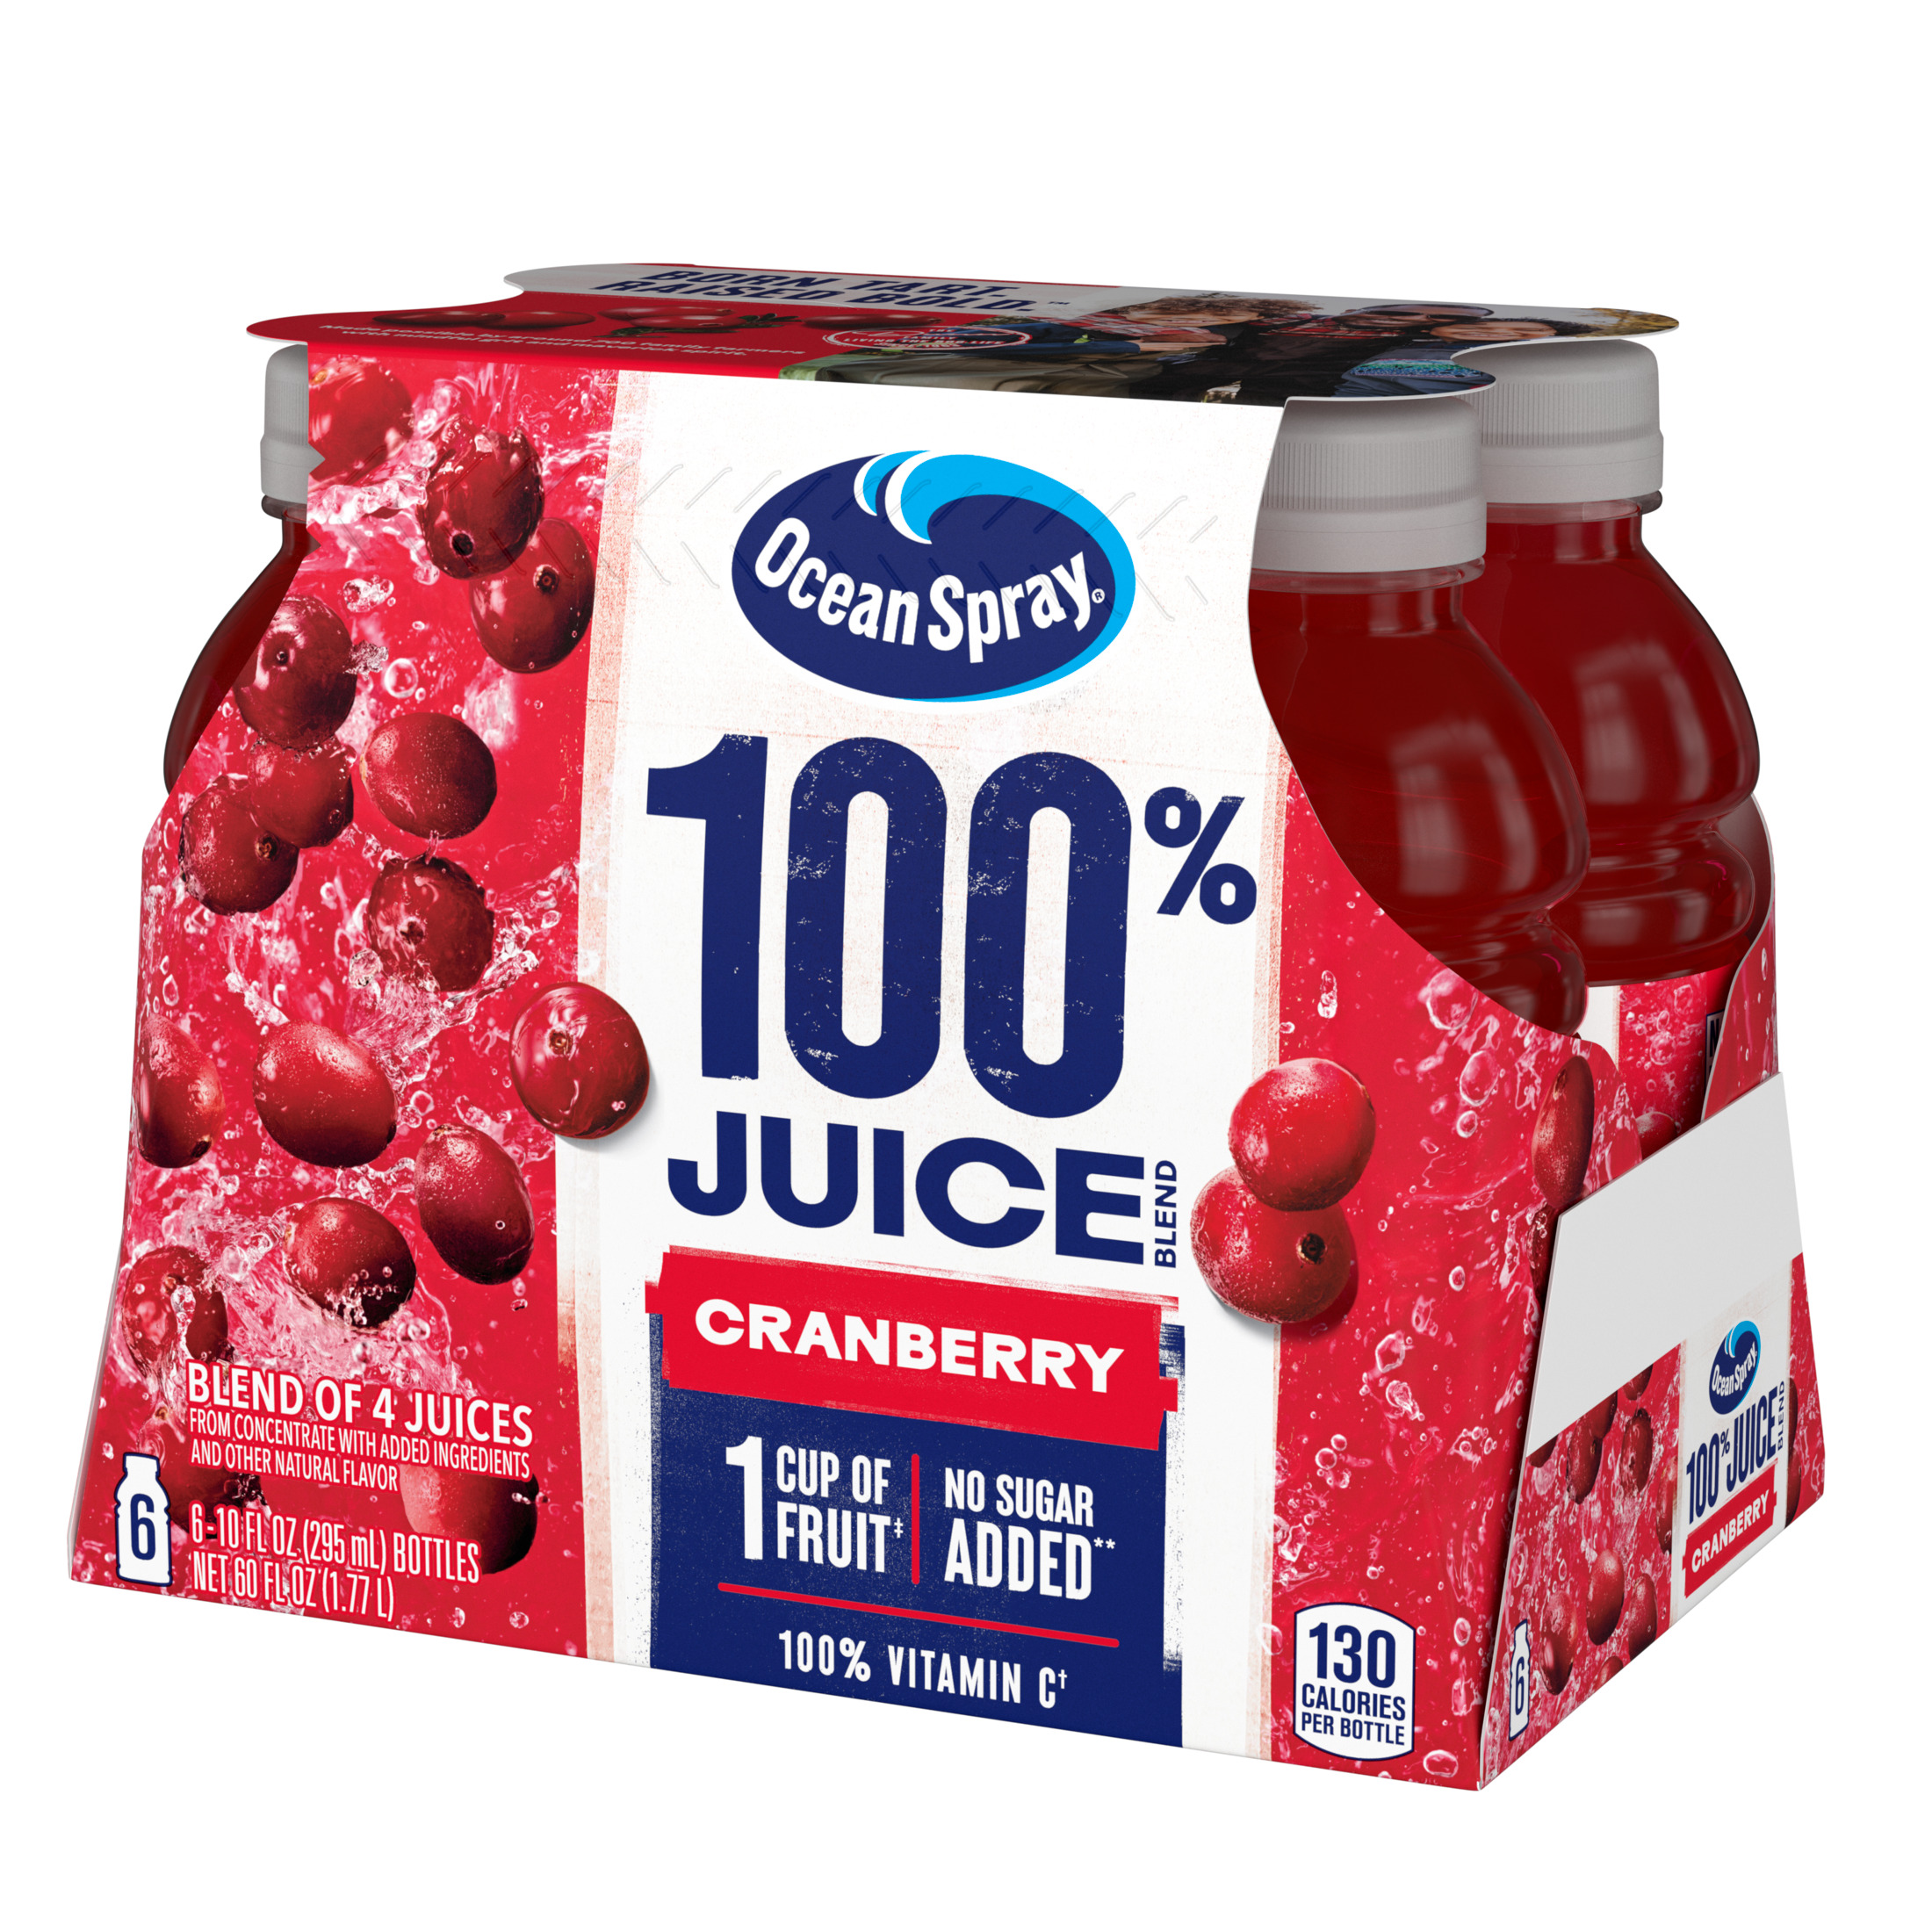 Ocean Spray® 100% Juice Cranberry Juice Blend, 10 fl oz Bottles, 6 Count - image 4 of 7